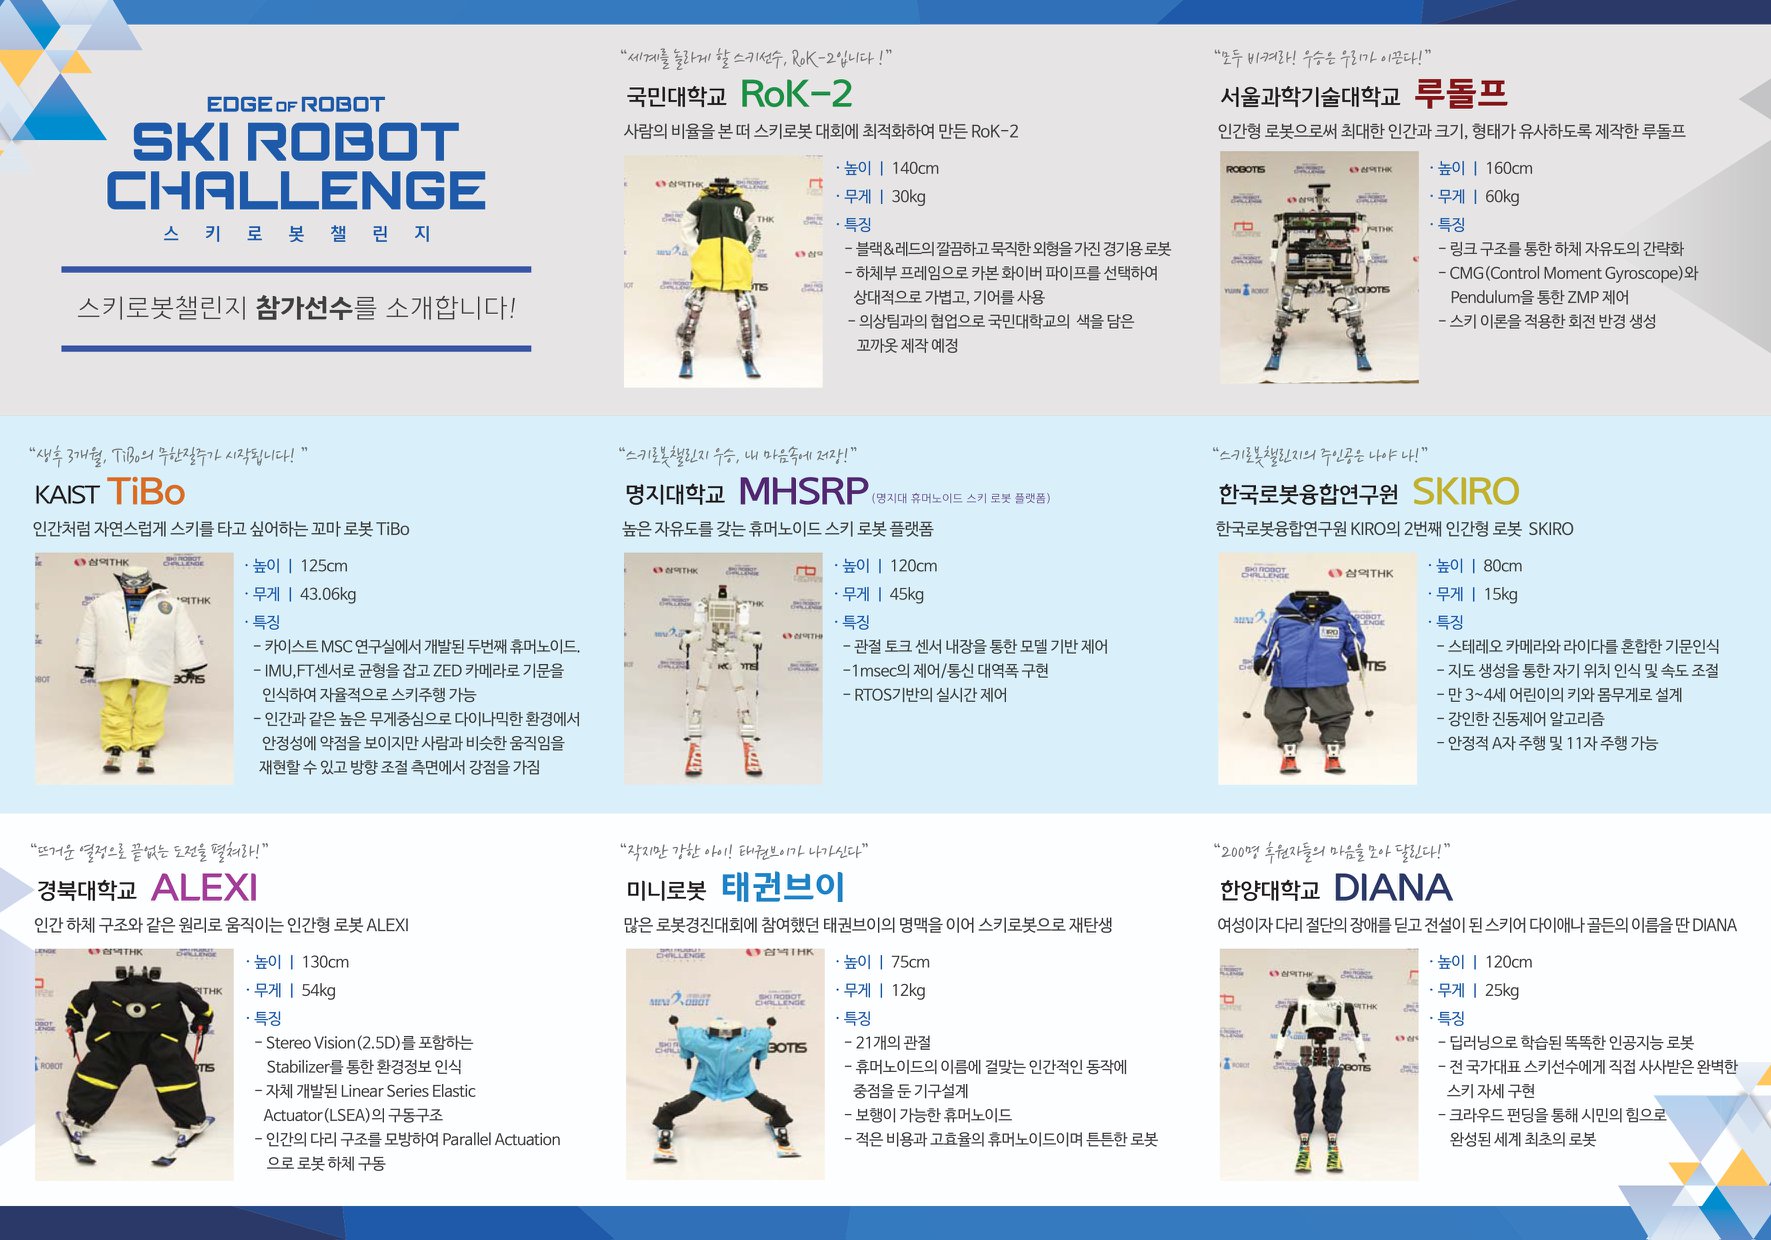 Winter olympics Robot Challenge